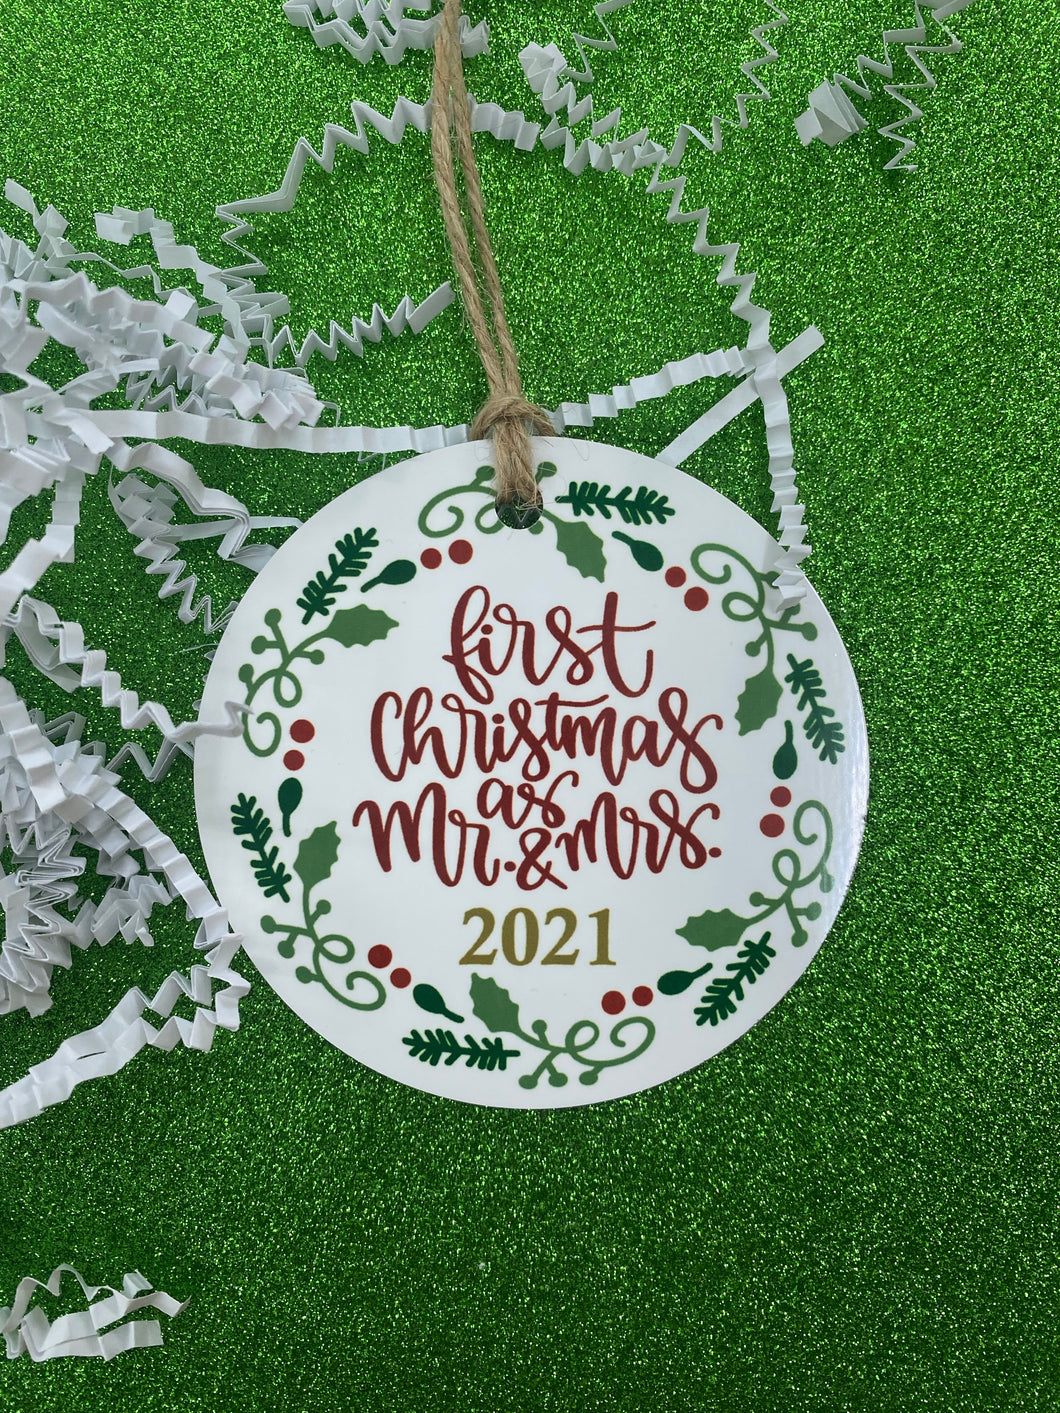 DIY Sublimation Christmas Ornaments: 2 Creative Methods